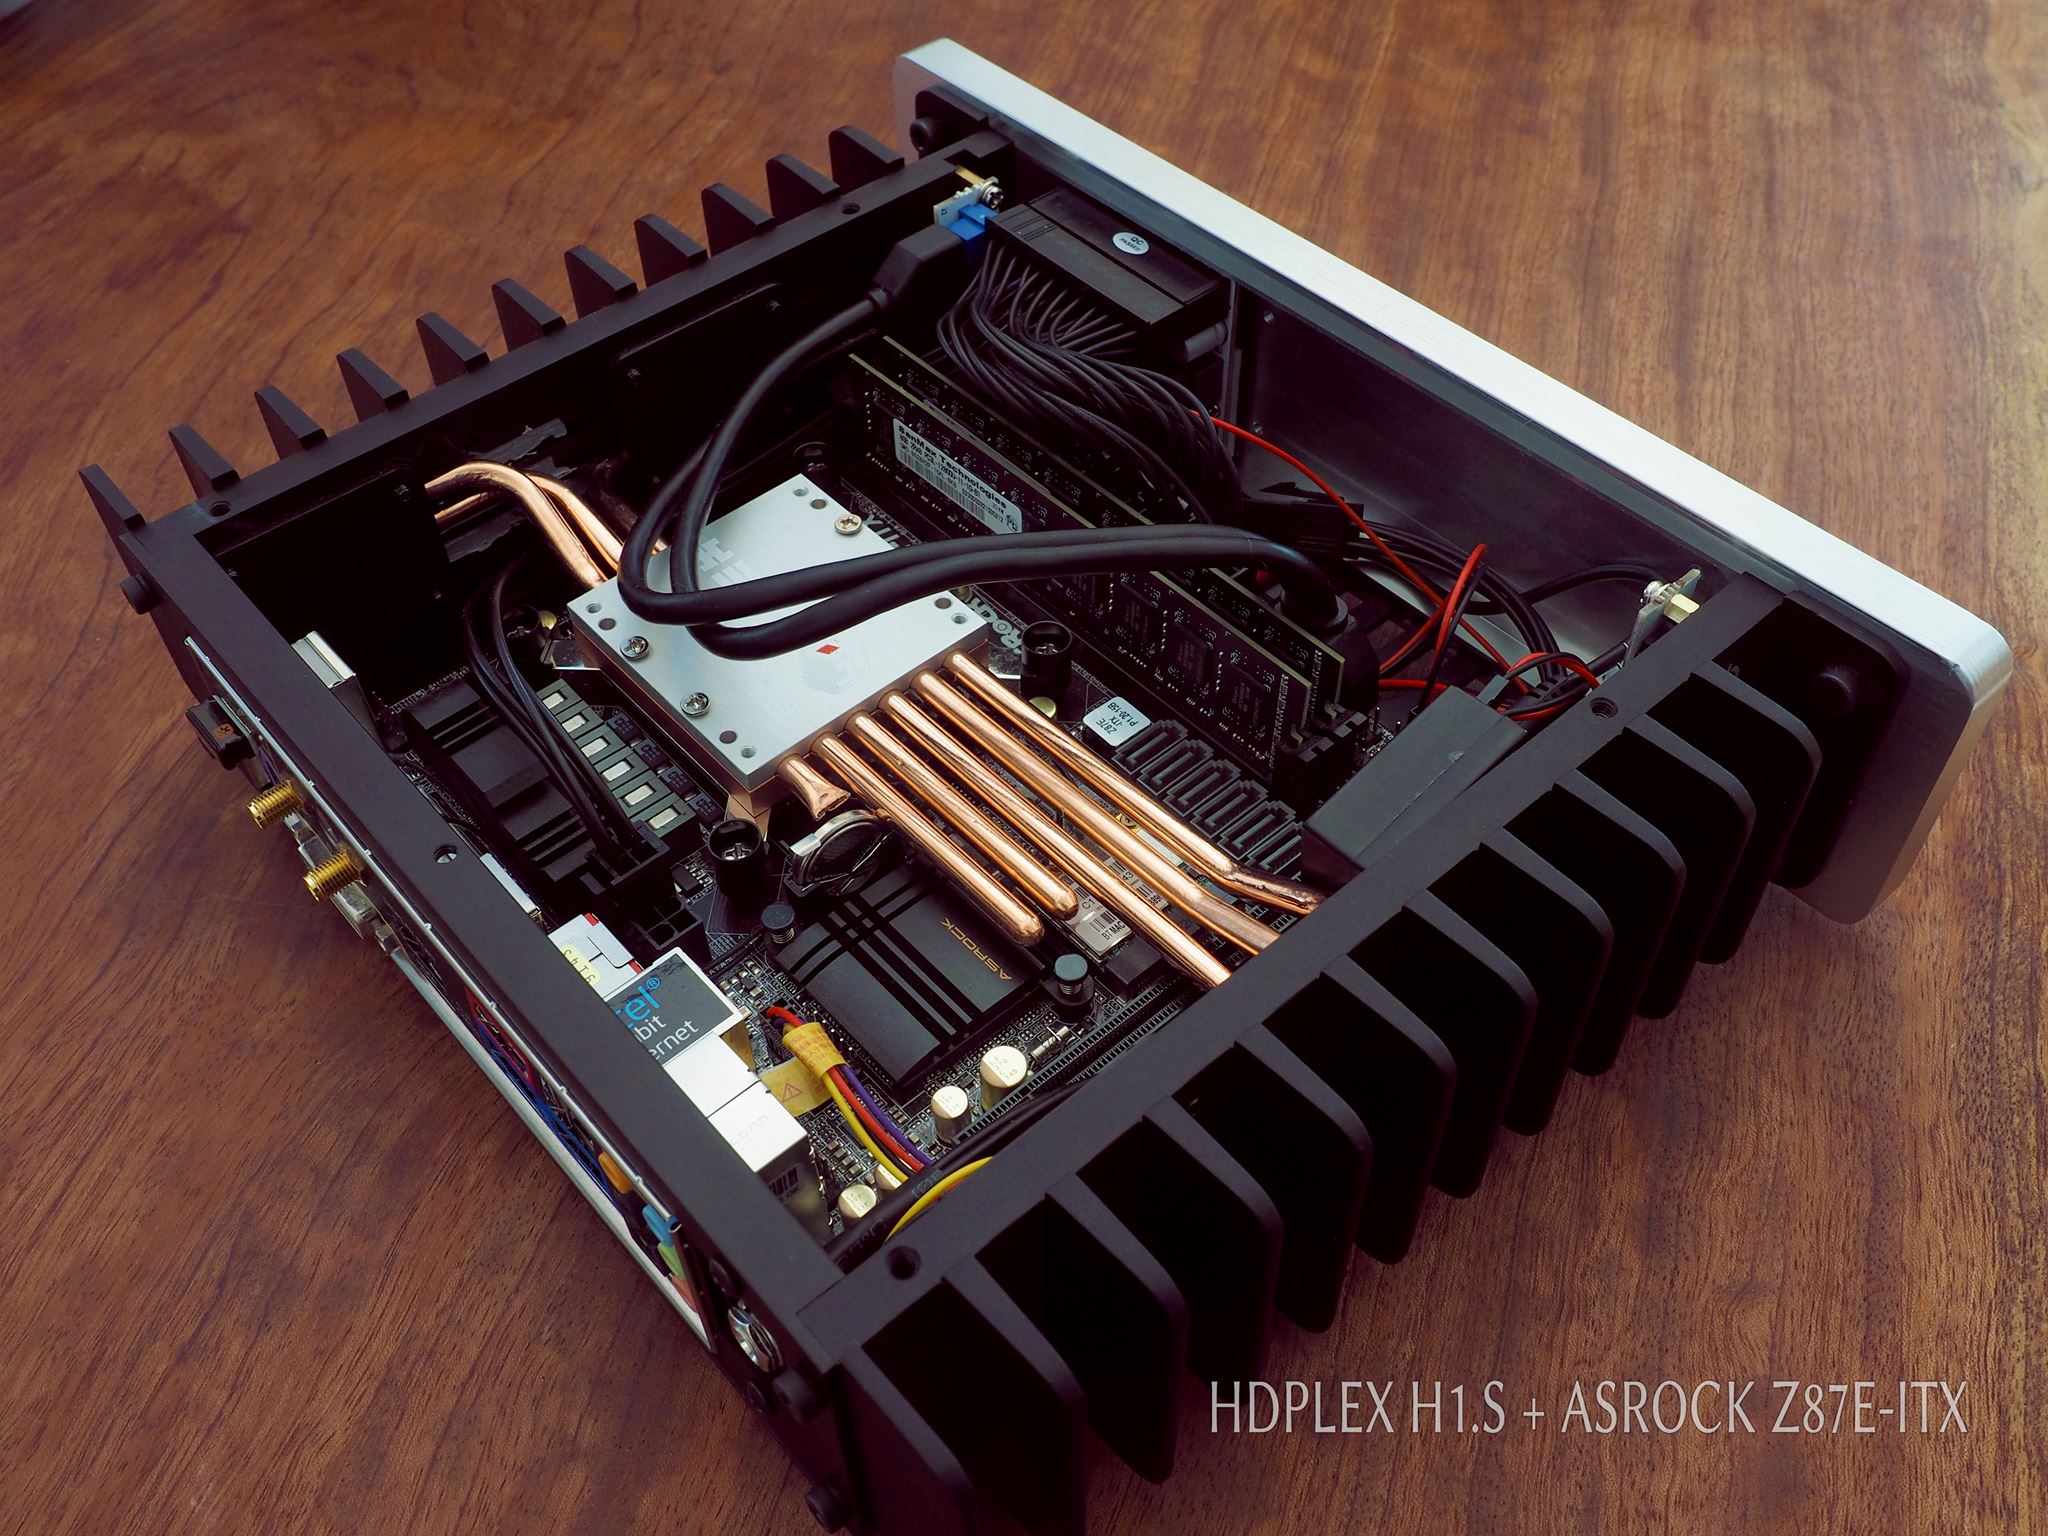 HDPLEX fanless H1.S computer case